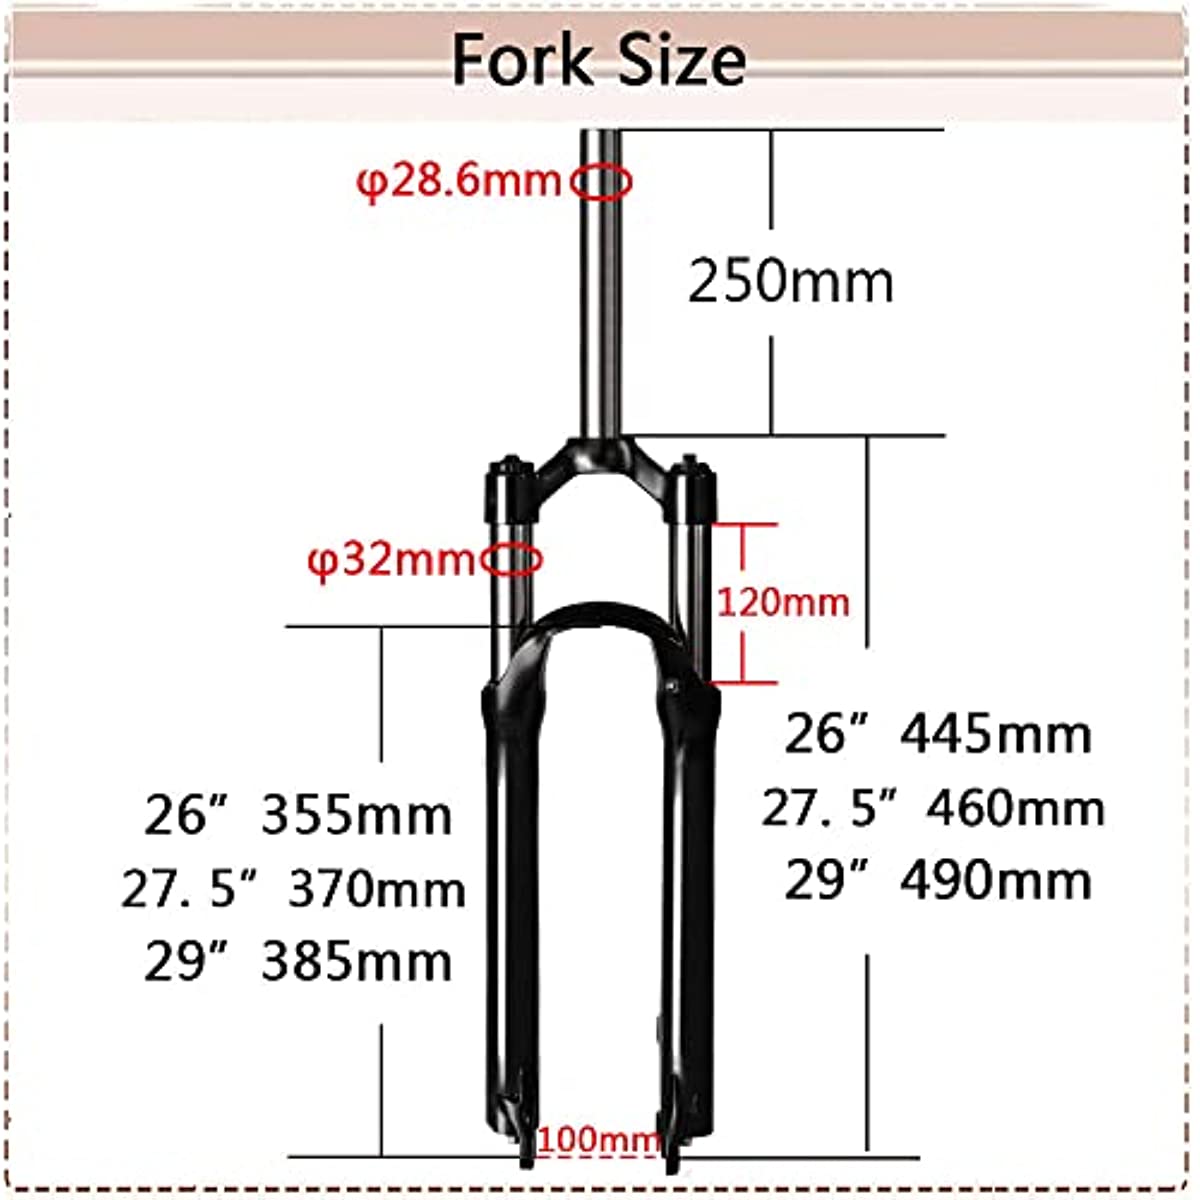 Suspension Fork Dimensions